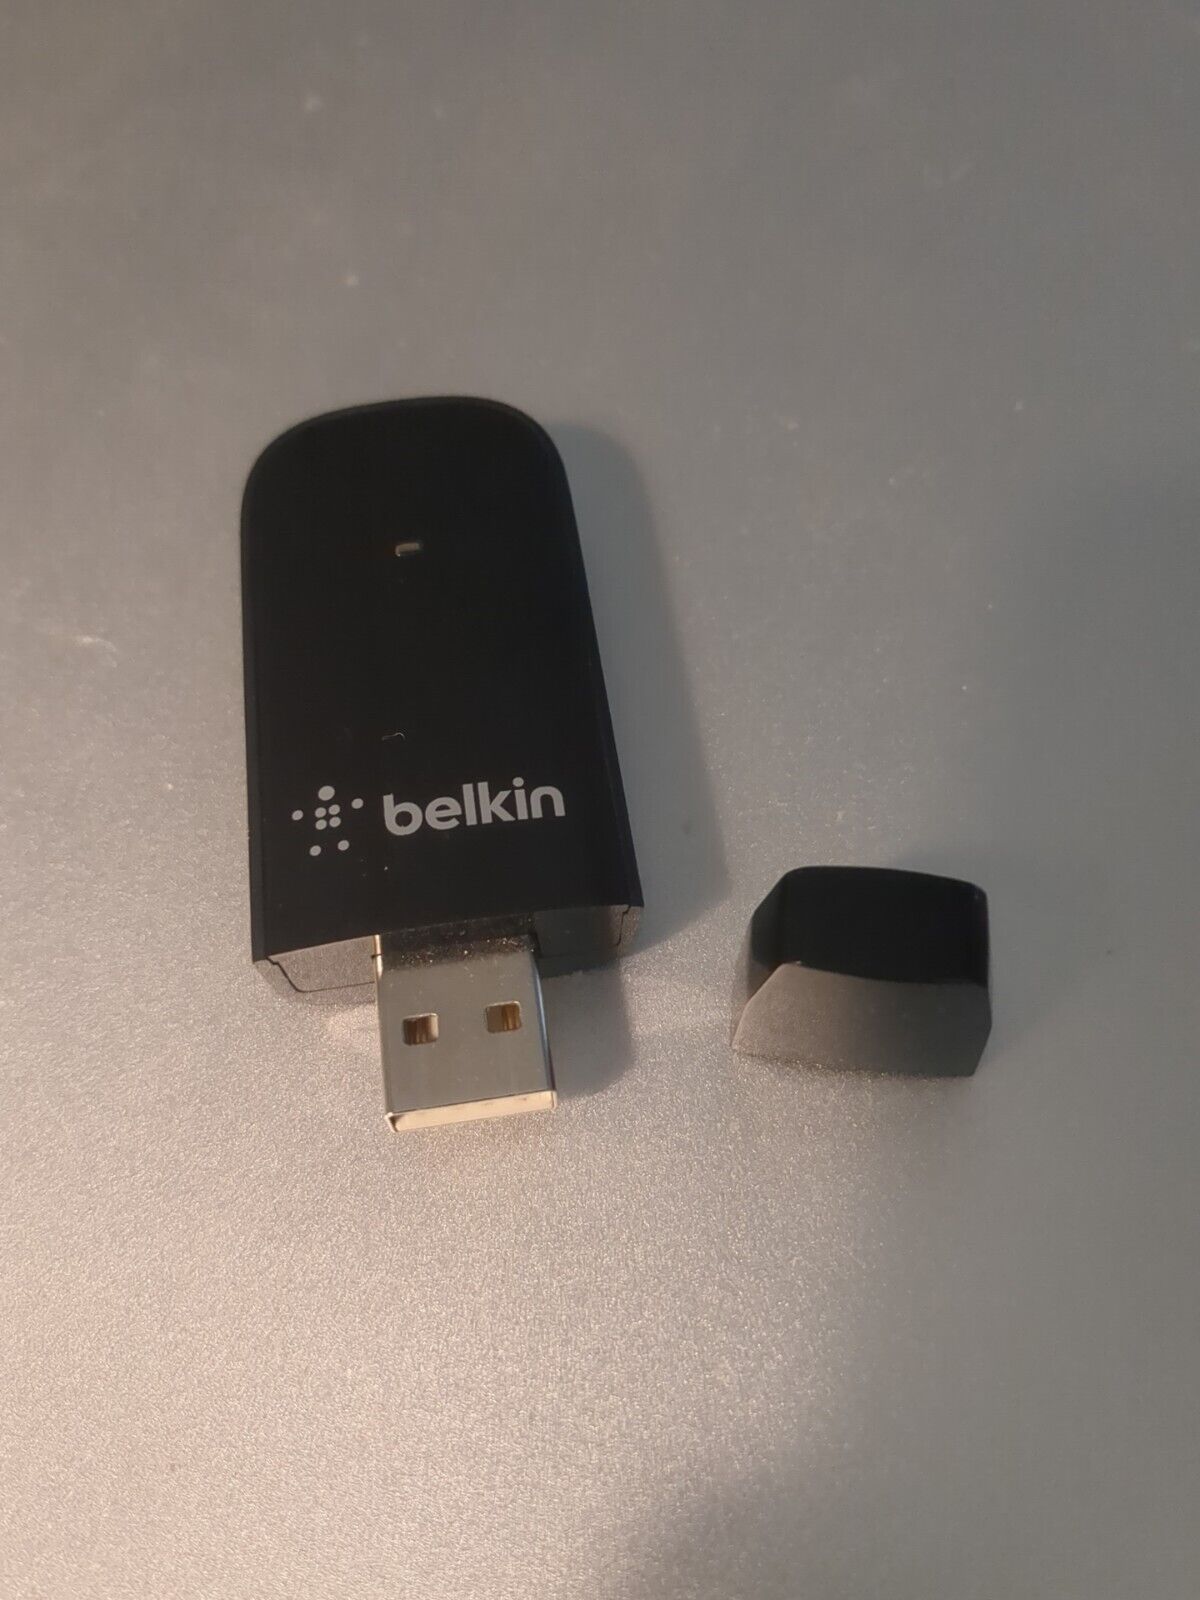 Belkin N300 High Performance Wireless 802.11b/g/n Wi-Fi USB Adapter works good